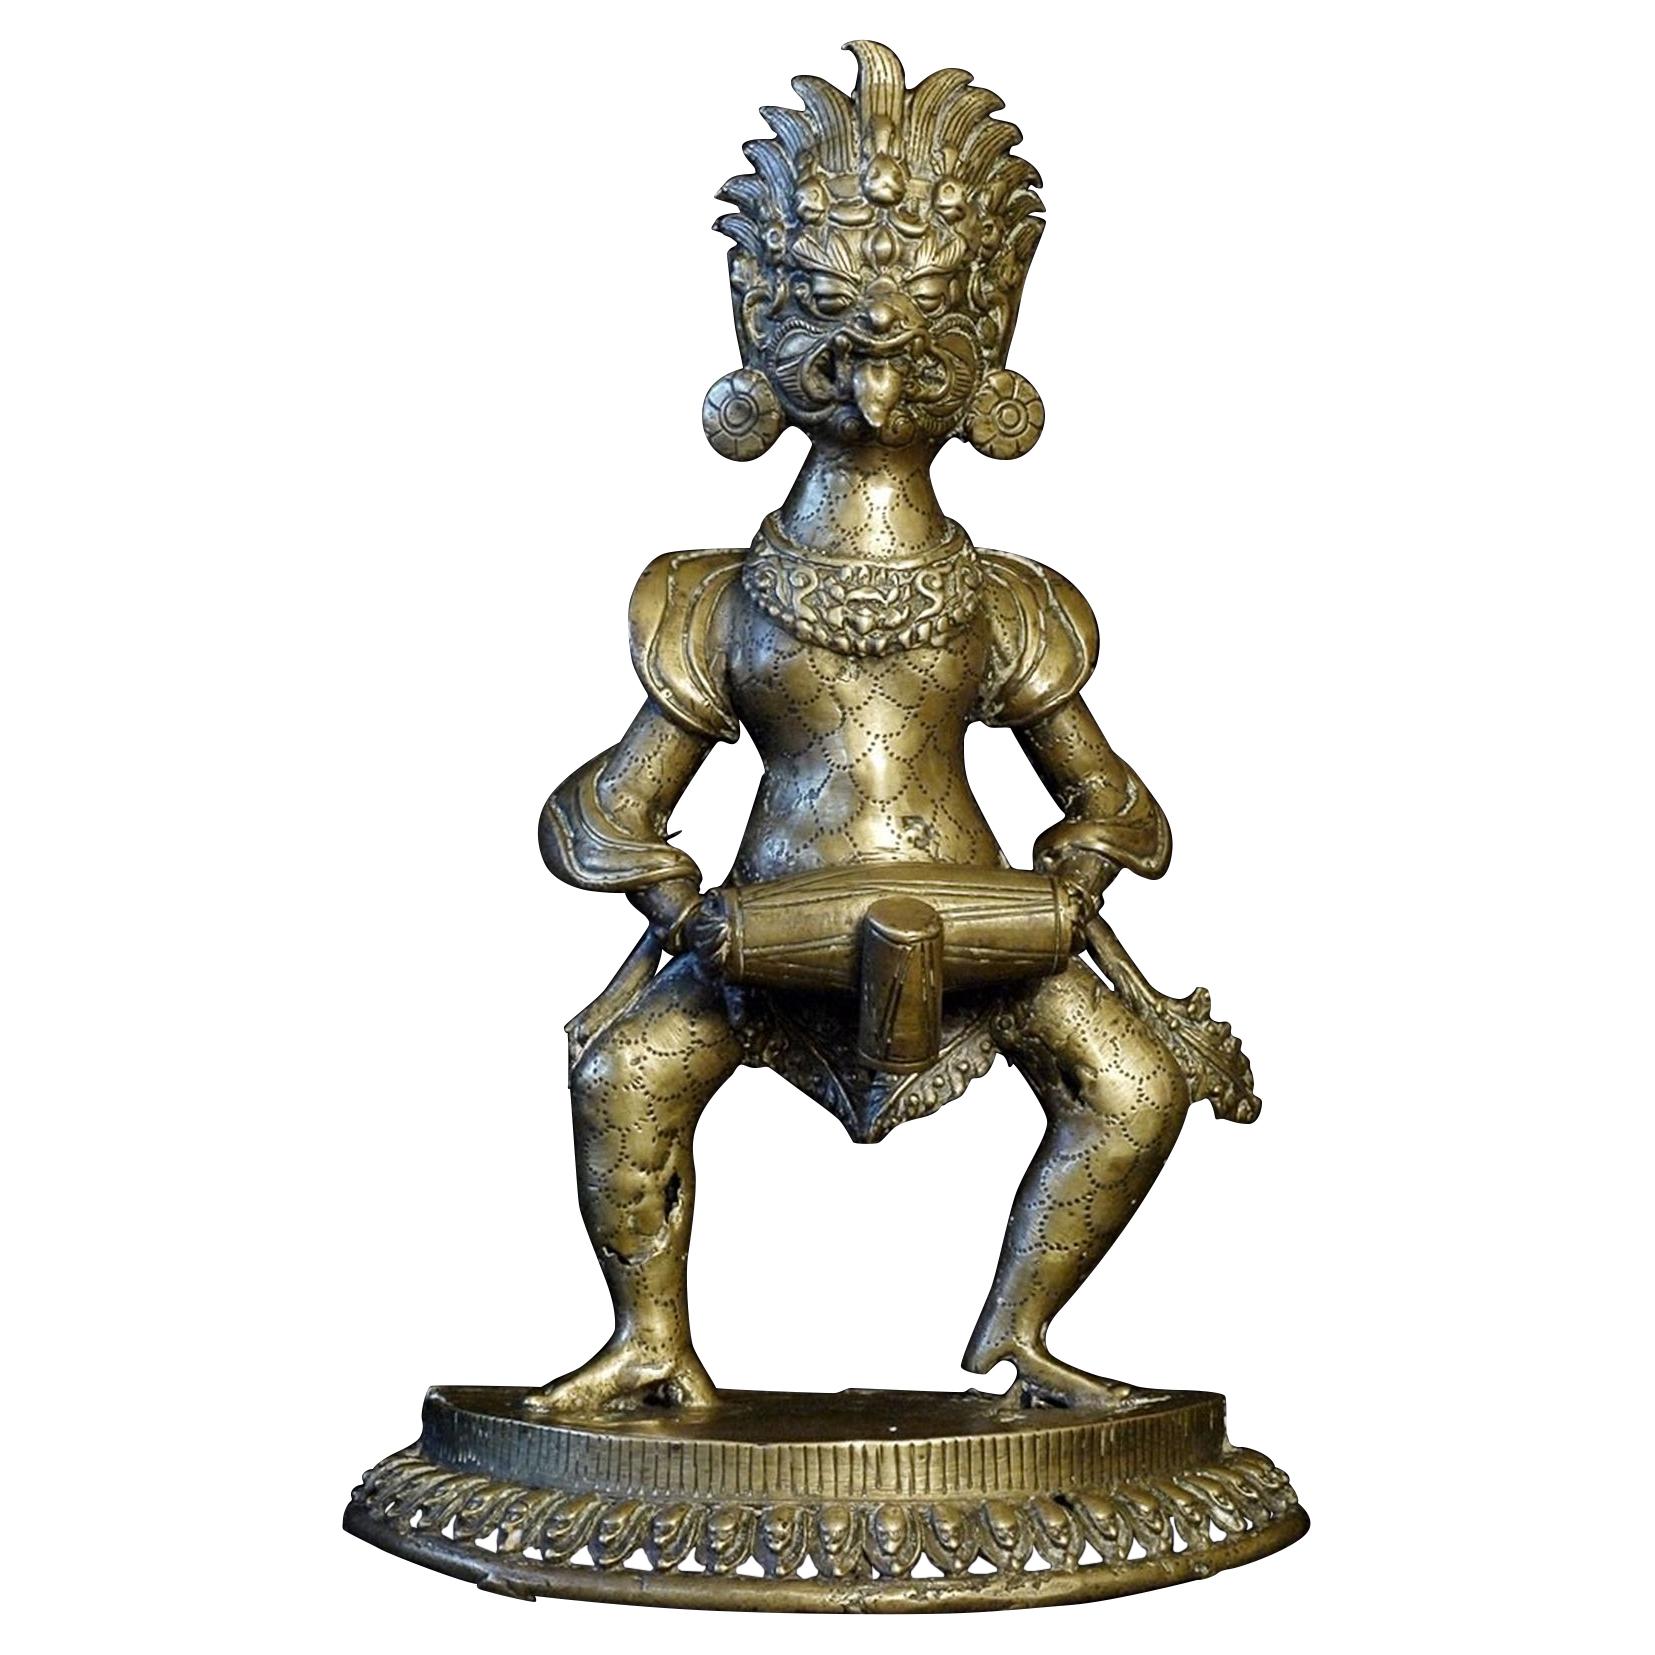 18th/19thC Nepalese Bronze or Brass Fierce Deity - 8630 For Sale